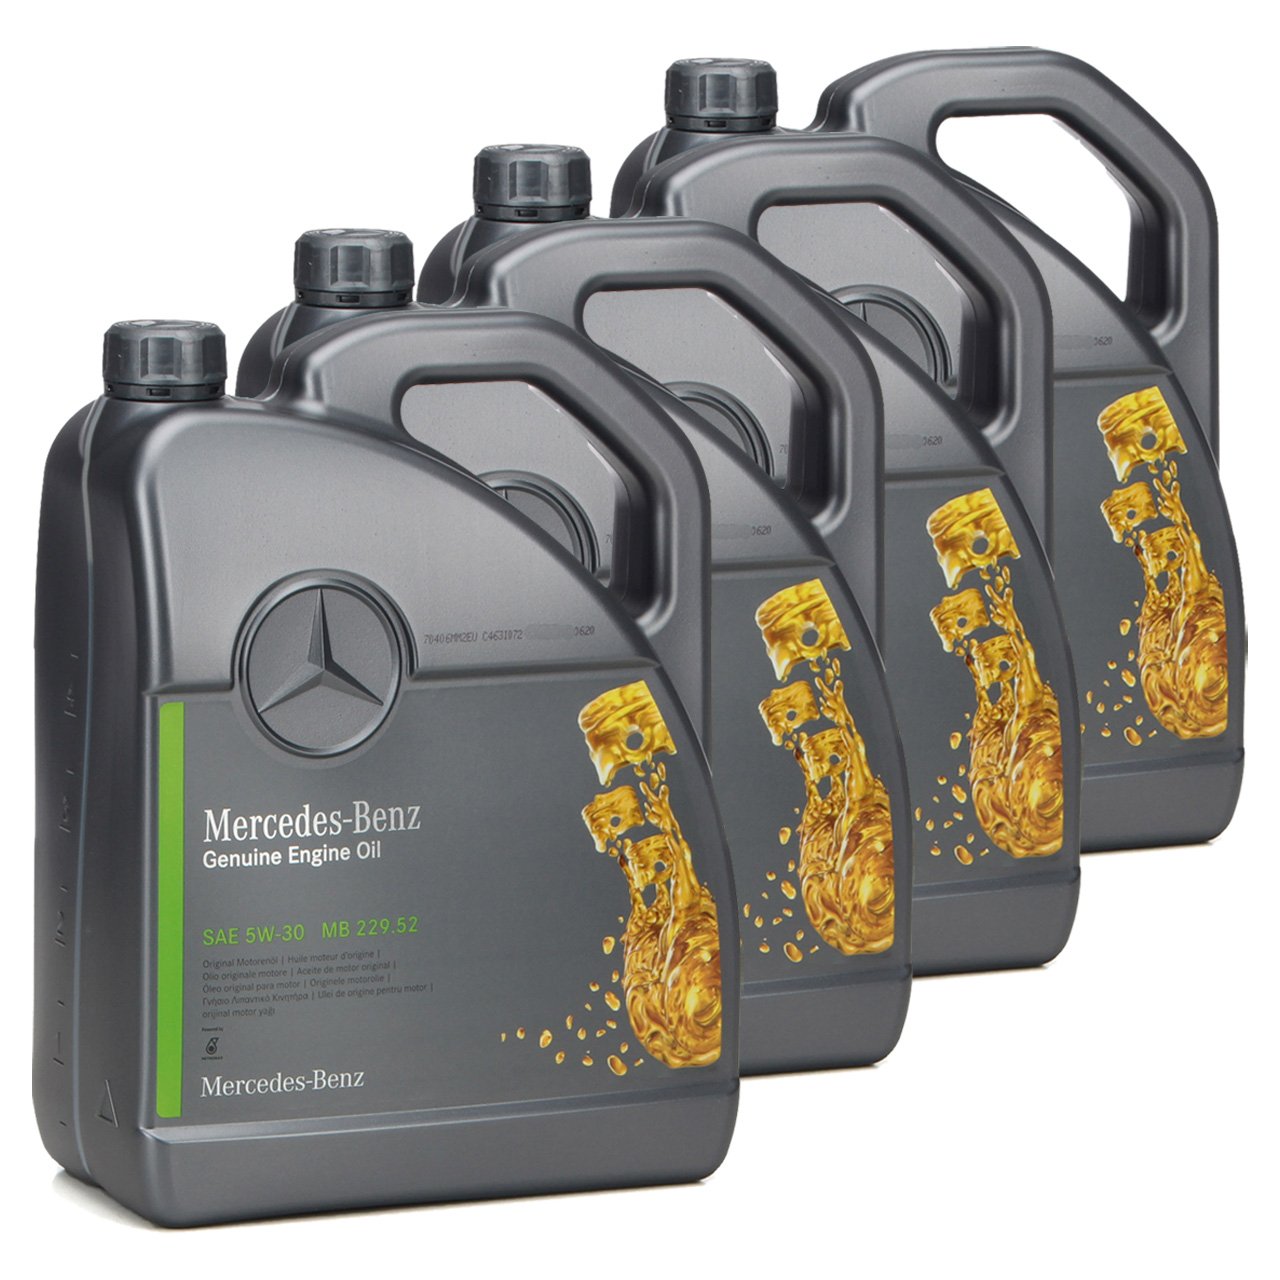 20L 20 Liter ORIGINAL Mercedes-Benz Motoröl ÖL 5W30 5W-30 MB 229.52 000989330913